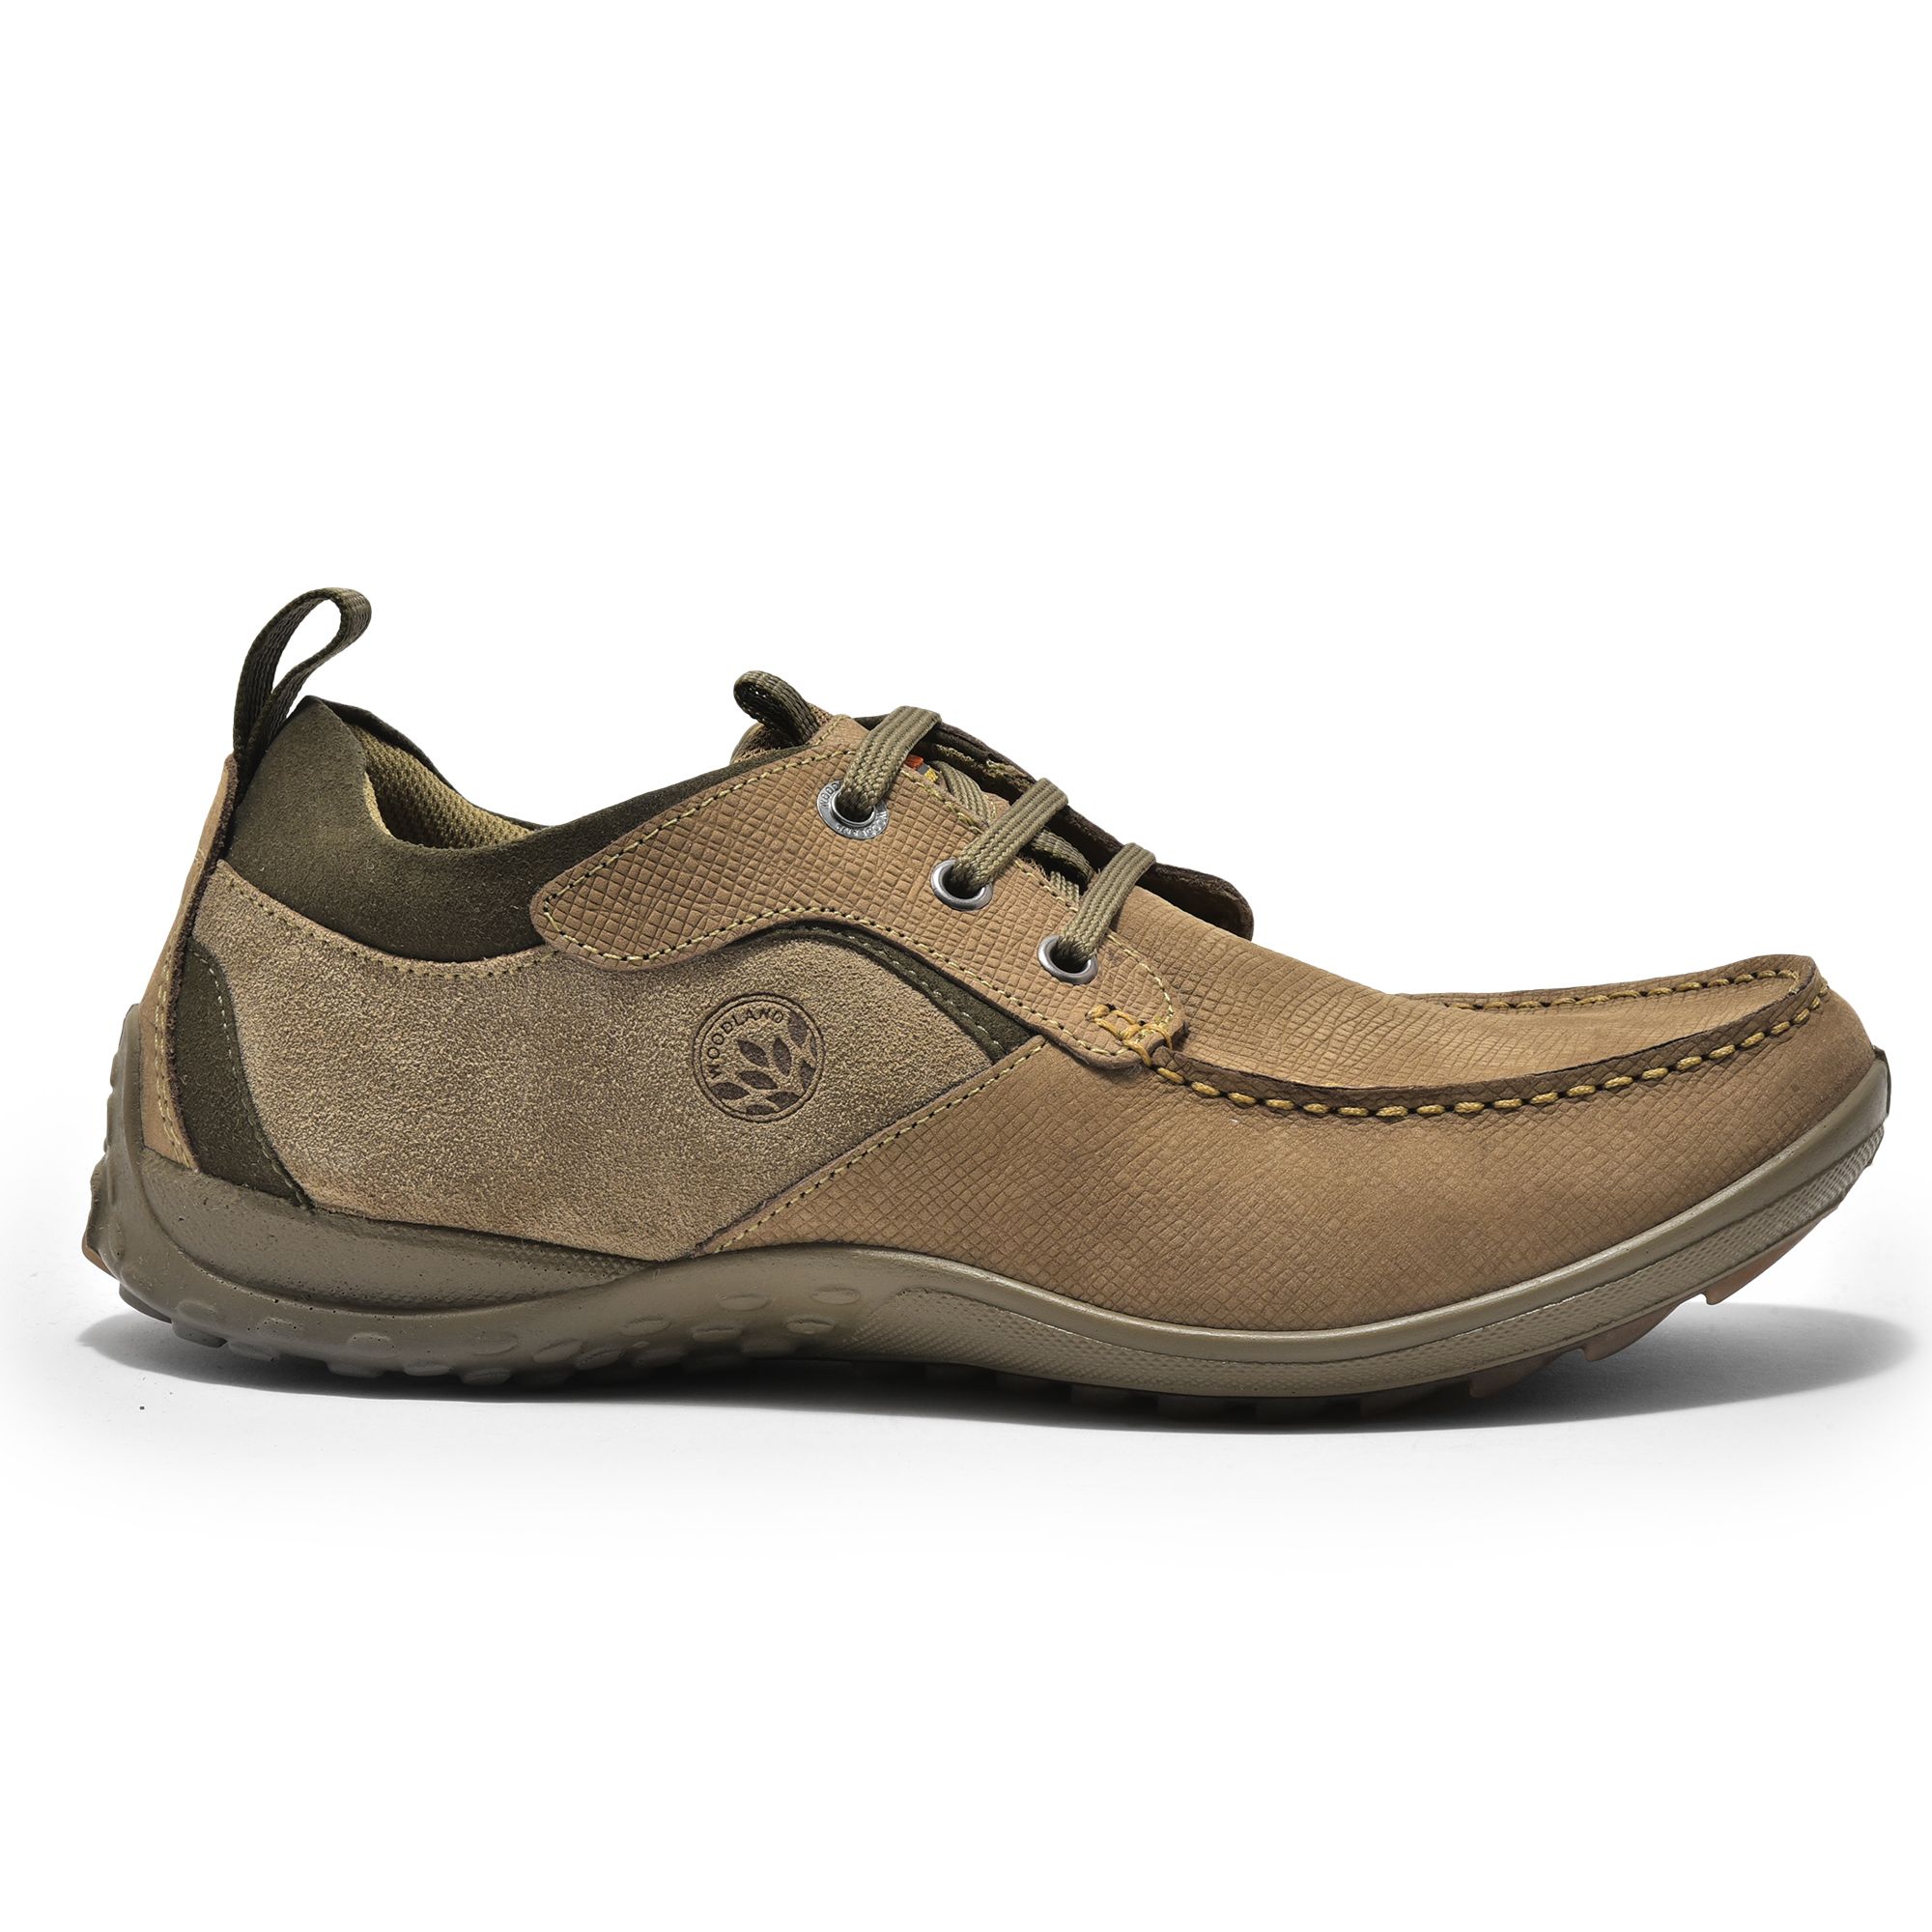 Woodland Hiking Shoe Men's Size 8.5 Brown Leather Casual Walking | eBay